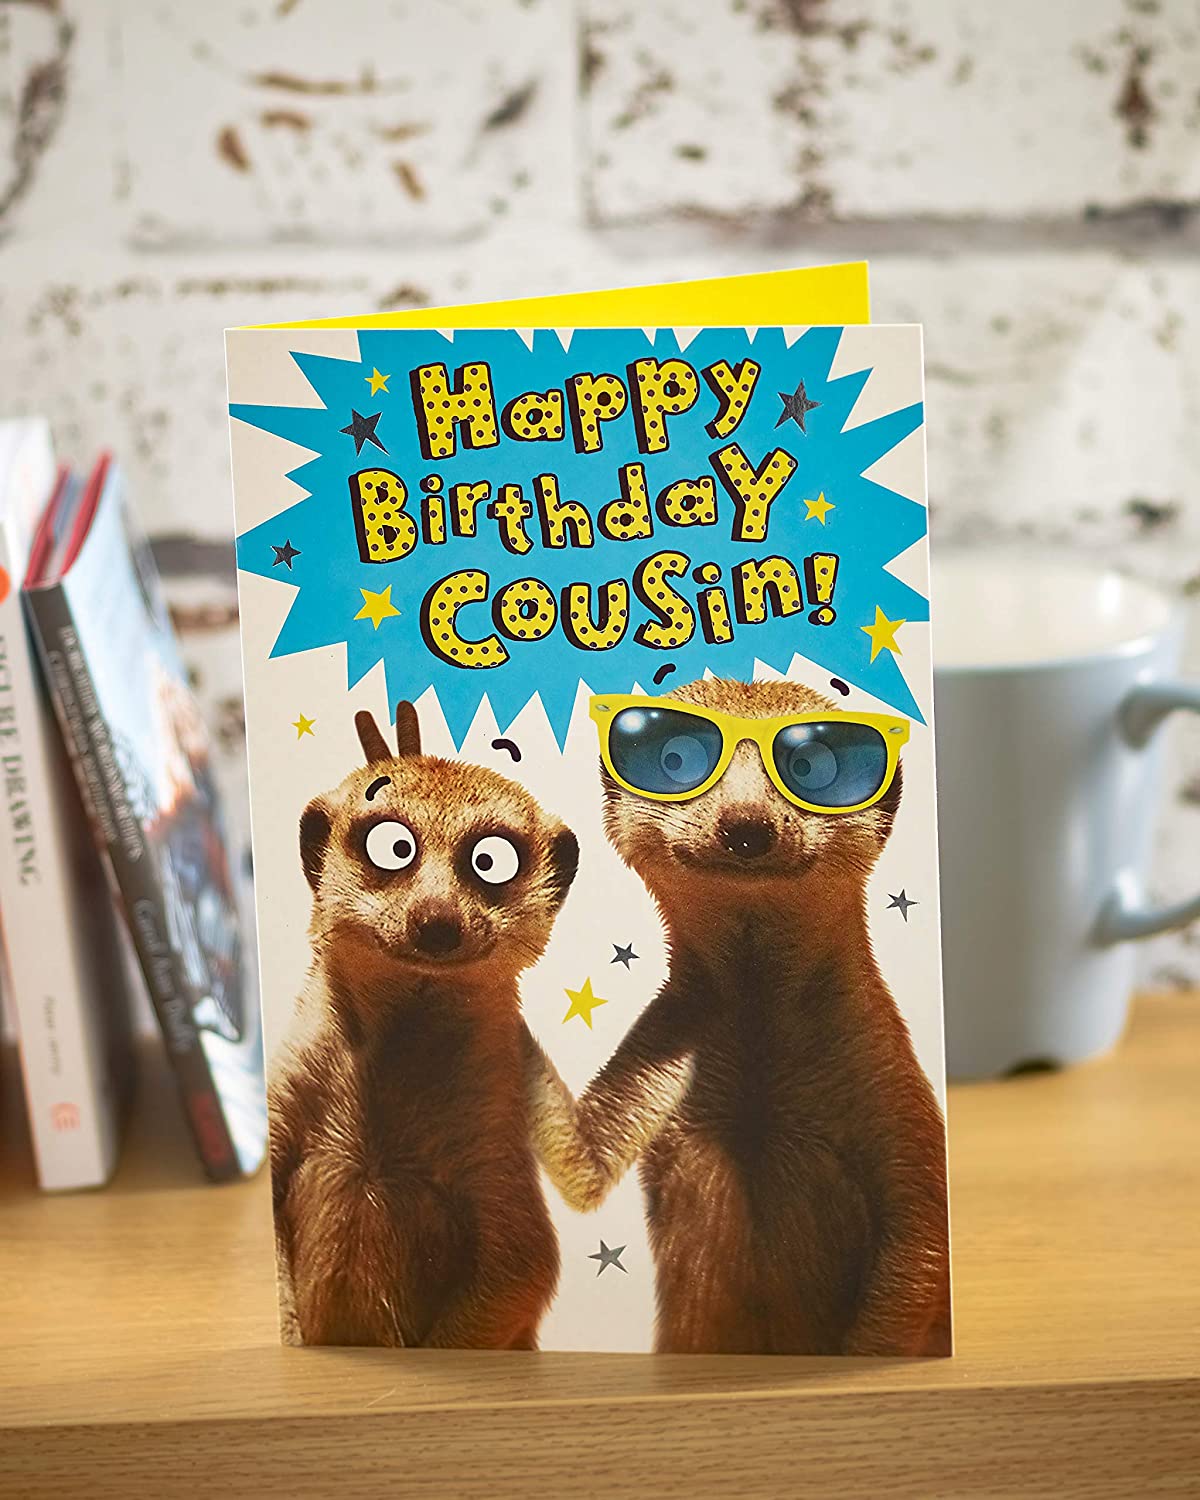 Cousin Cute Meerkat Happy Birthday Funny Card